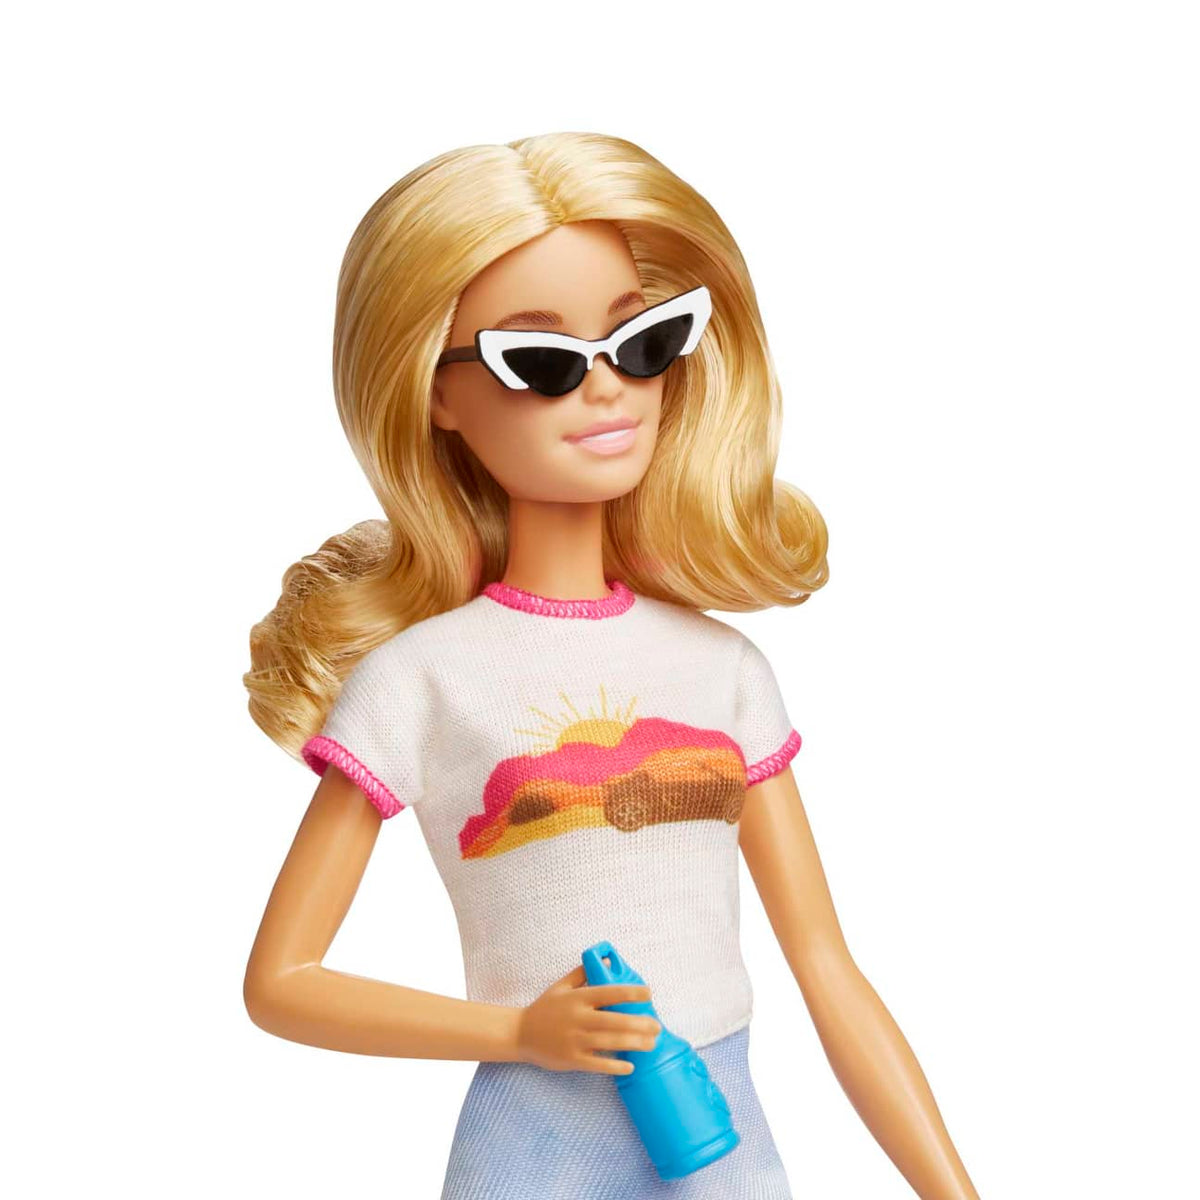 Barbie &#39;Malibu&#39; Travel Set -  10+ Pieces Including Working Suitcase &amp; Puppy